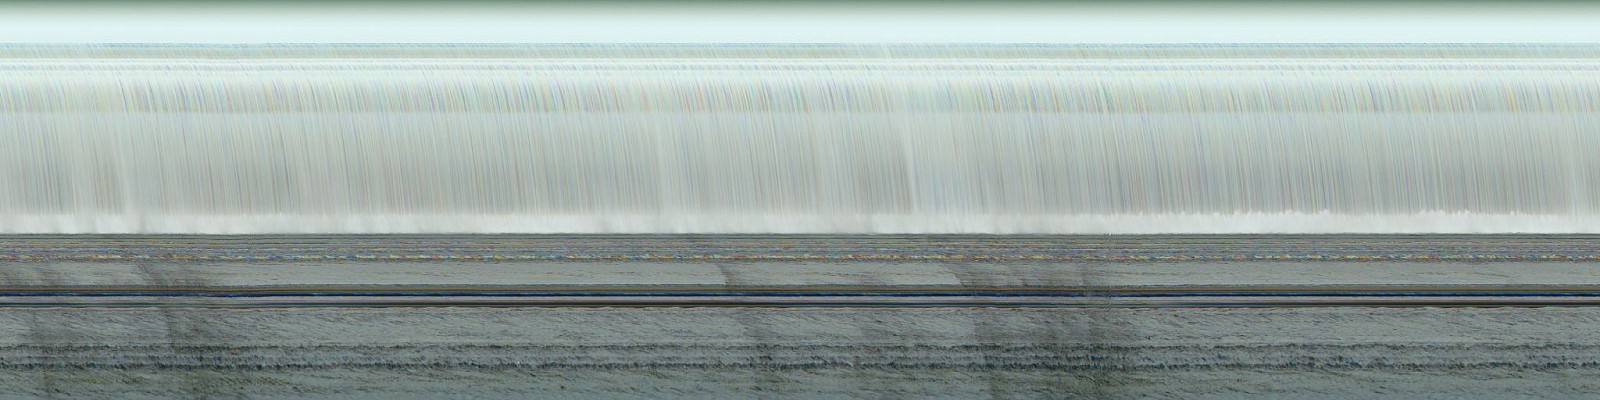 Jay Mark Johnson, ÖXARÁRFOSS #3, 2021 Thingvellir National Park, Iceland
archival pigment on paper, mounted on aluminum, 40 x 160 in. (101.6 x 406.4 cm)